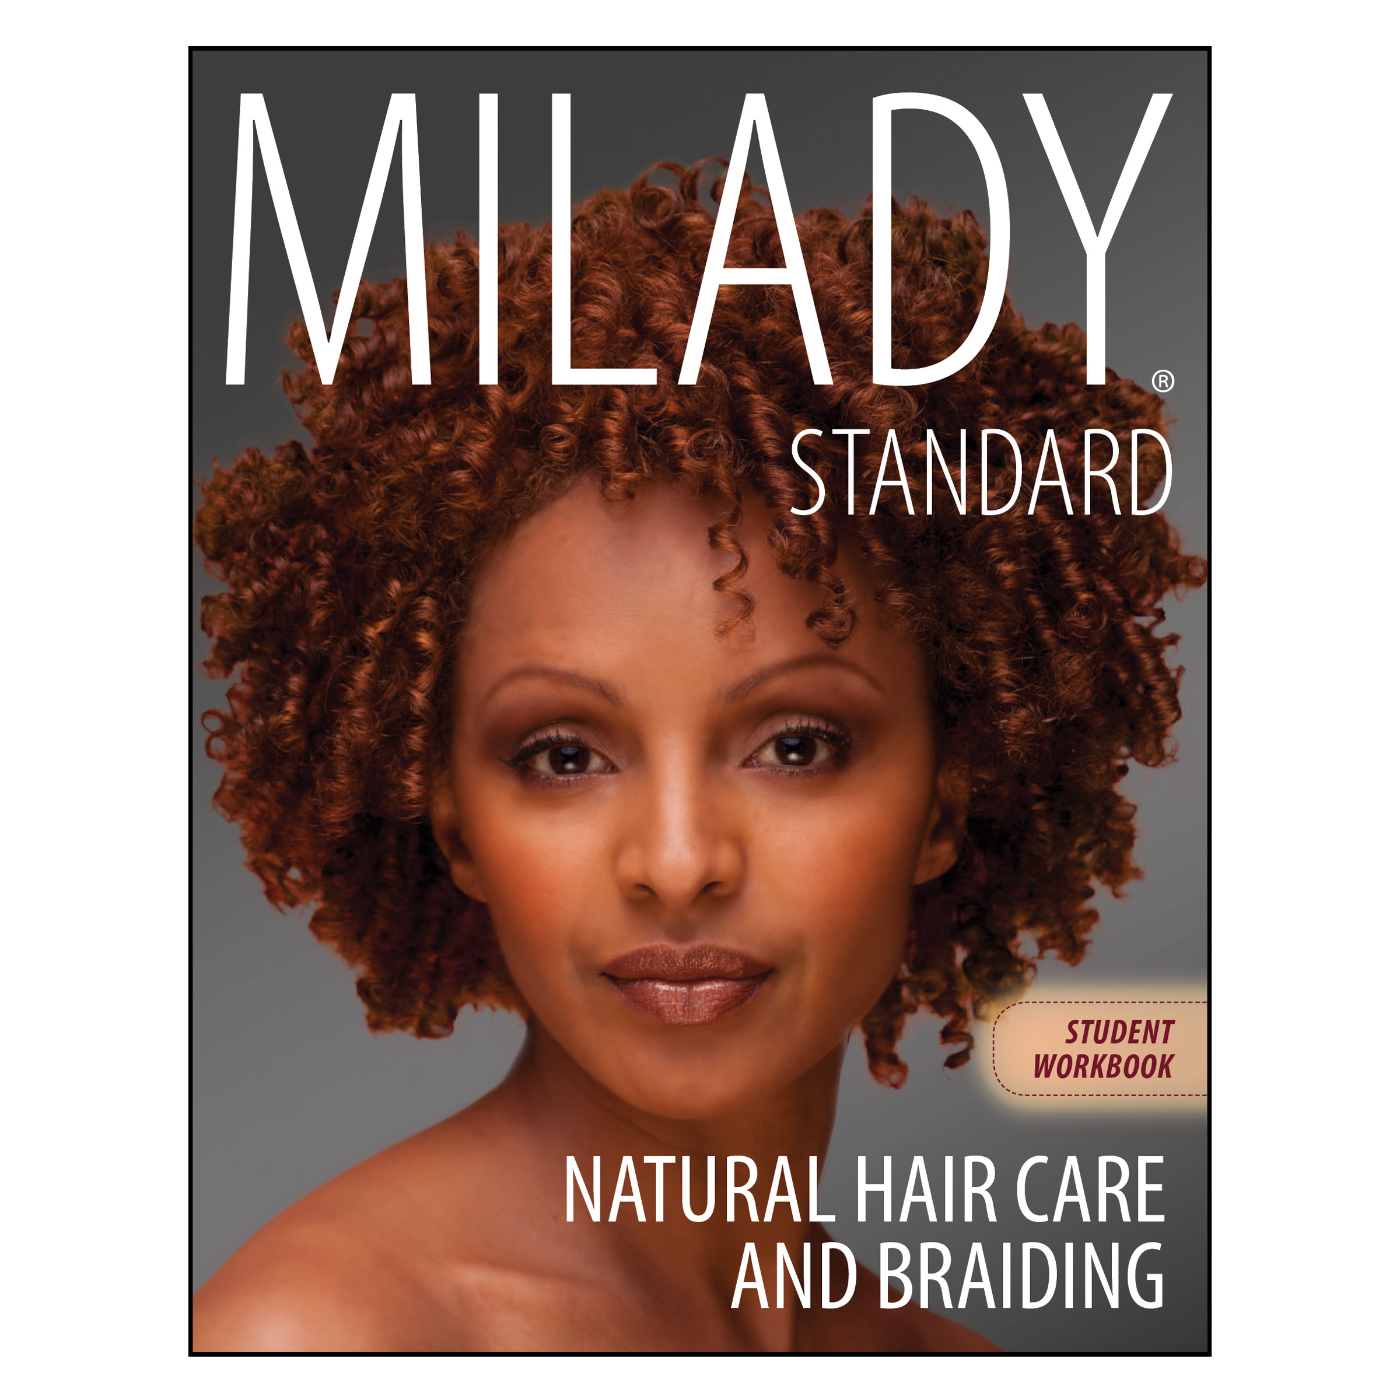 Natural Hair Care & Braiding Workbook